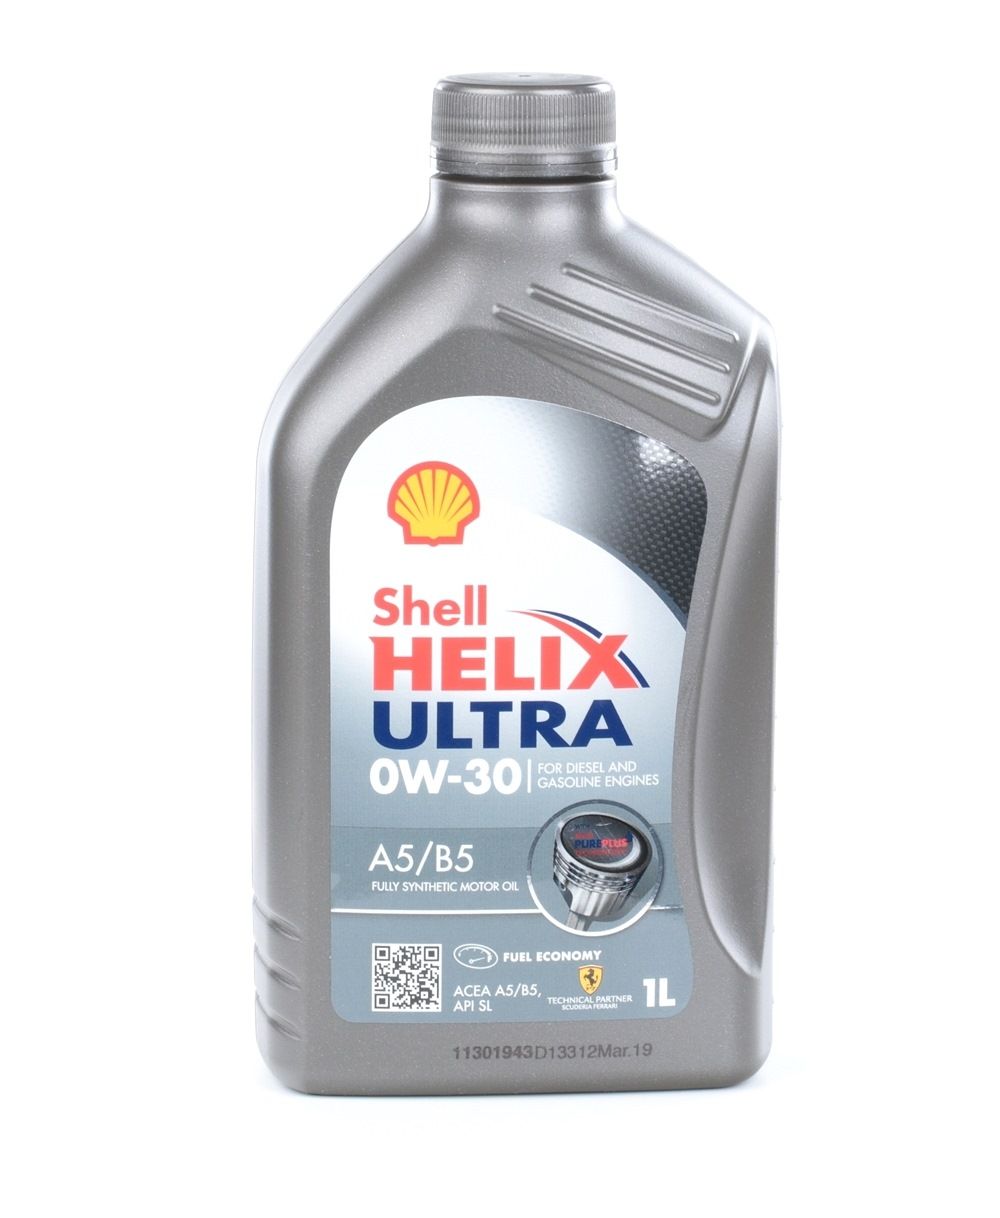 SHELL Motoröl FIAT,HYUNDAI,PEUGEOT 550046659 201510101210 Motorenöl,Öl,Öl für Motor von SHELL